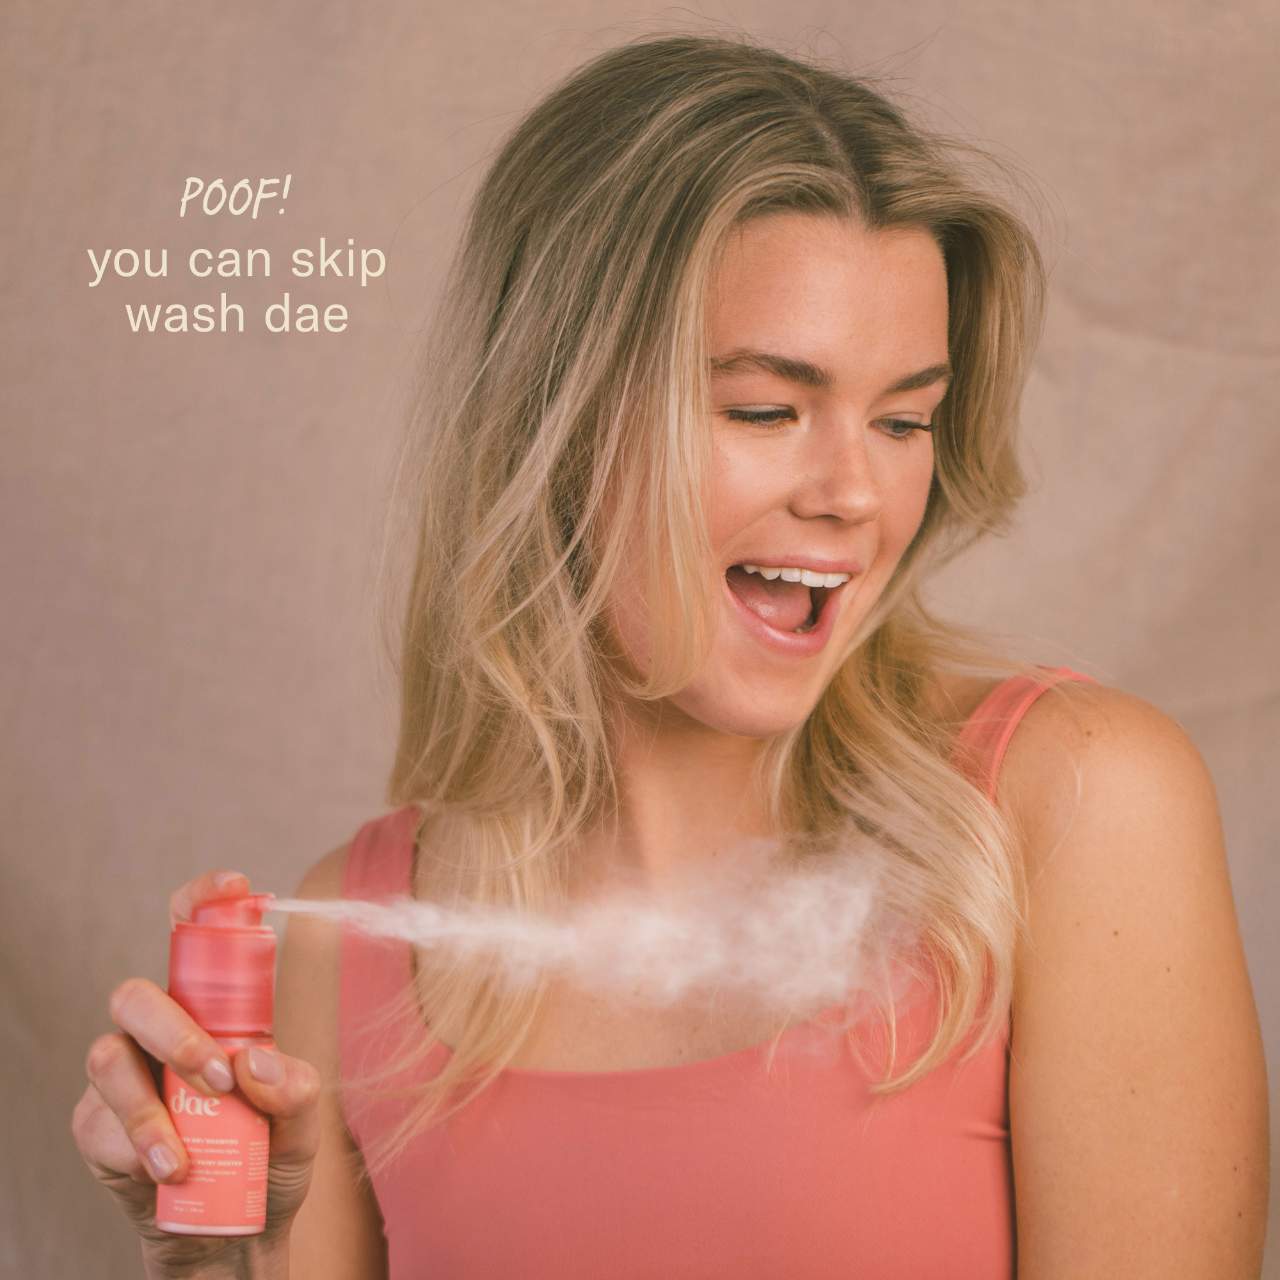 Pre Venta: dae | Fairy Duster Volumizing Dry Shampoo Powder